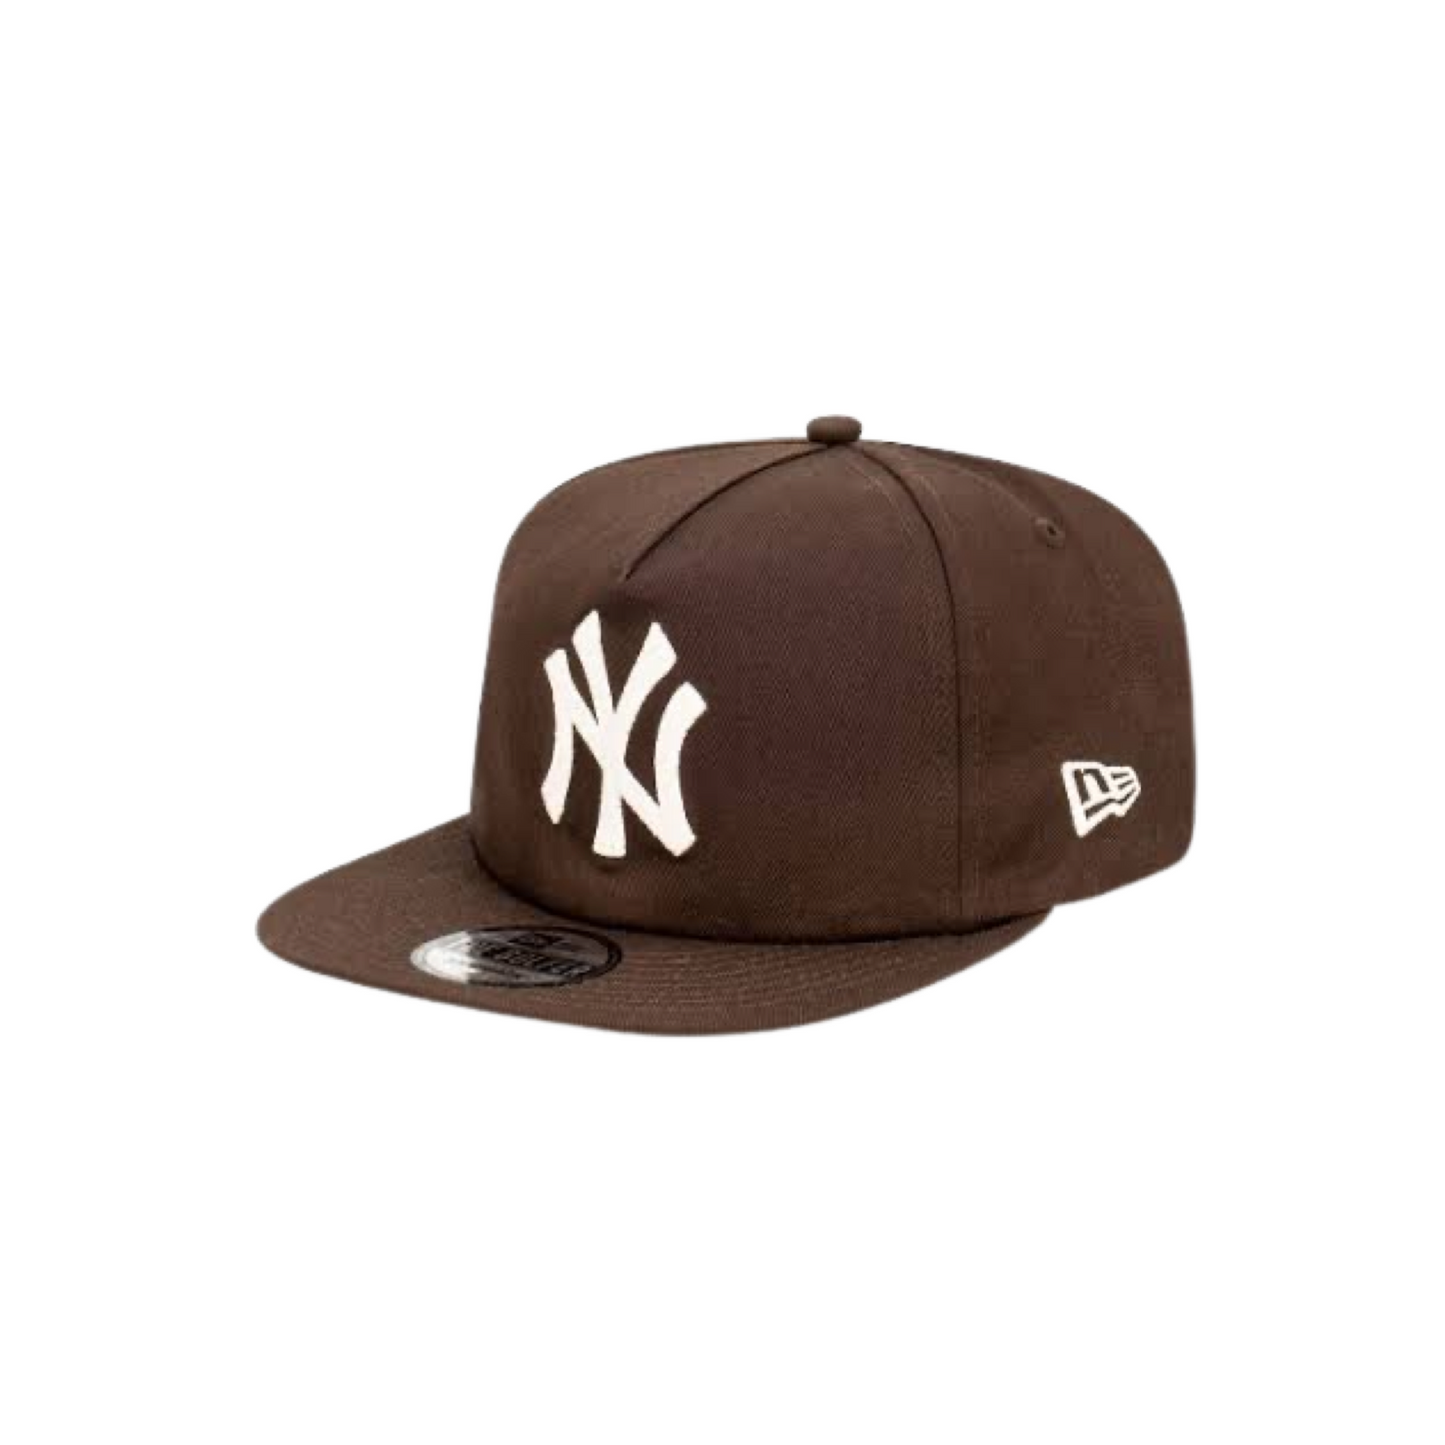 New Era Golfer Cap New York Yankees Walnut Stone Chain Stitch Snapback Cap